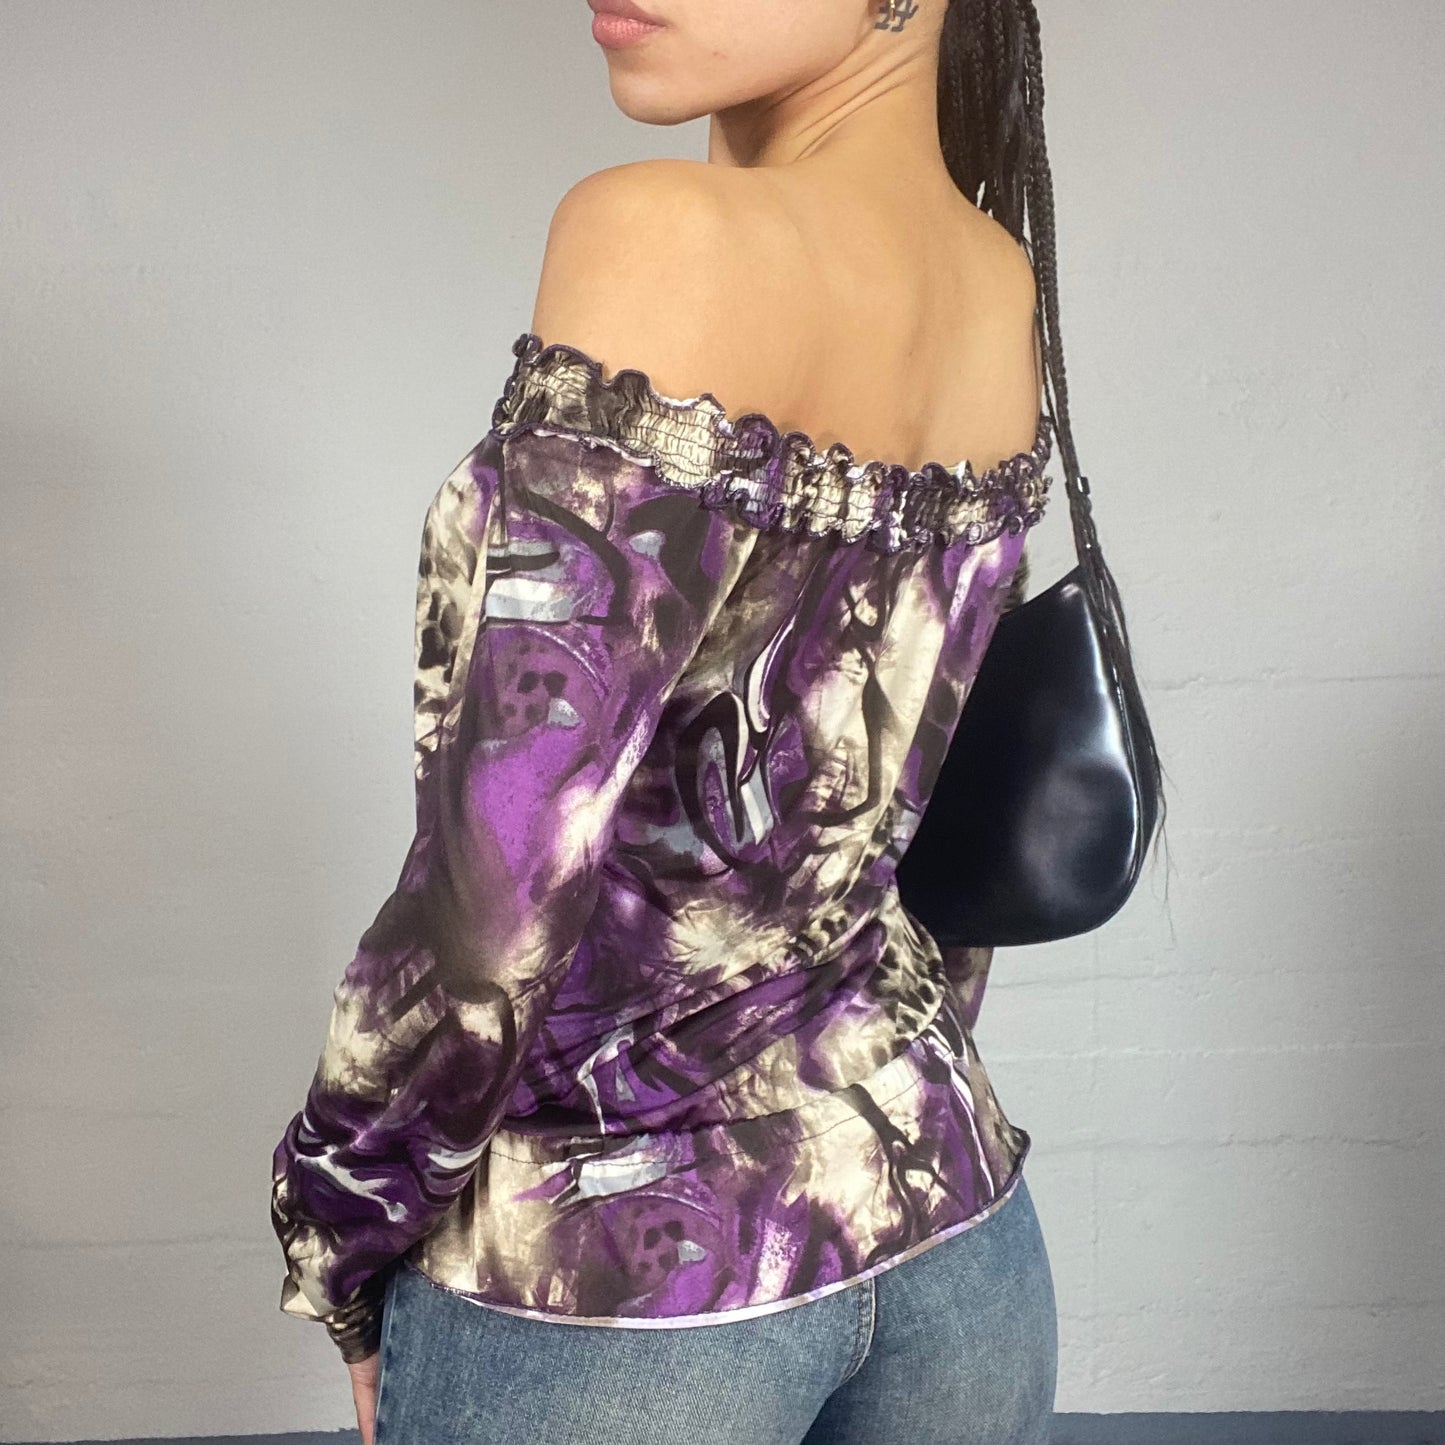 Vintage 2000's Desperate Housewive Beige Off Shoulder Blouse Top with Cheetah & Big Purple Floral Print (M)